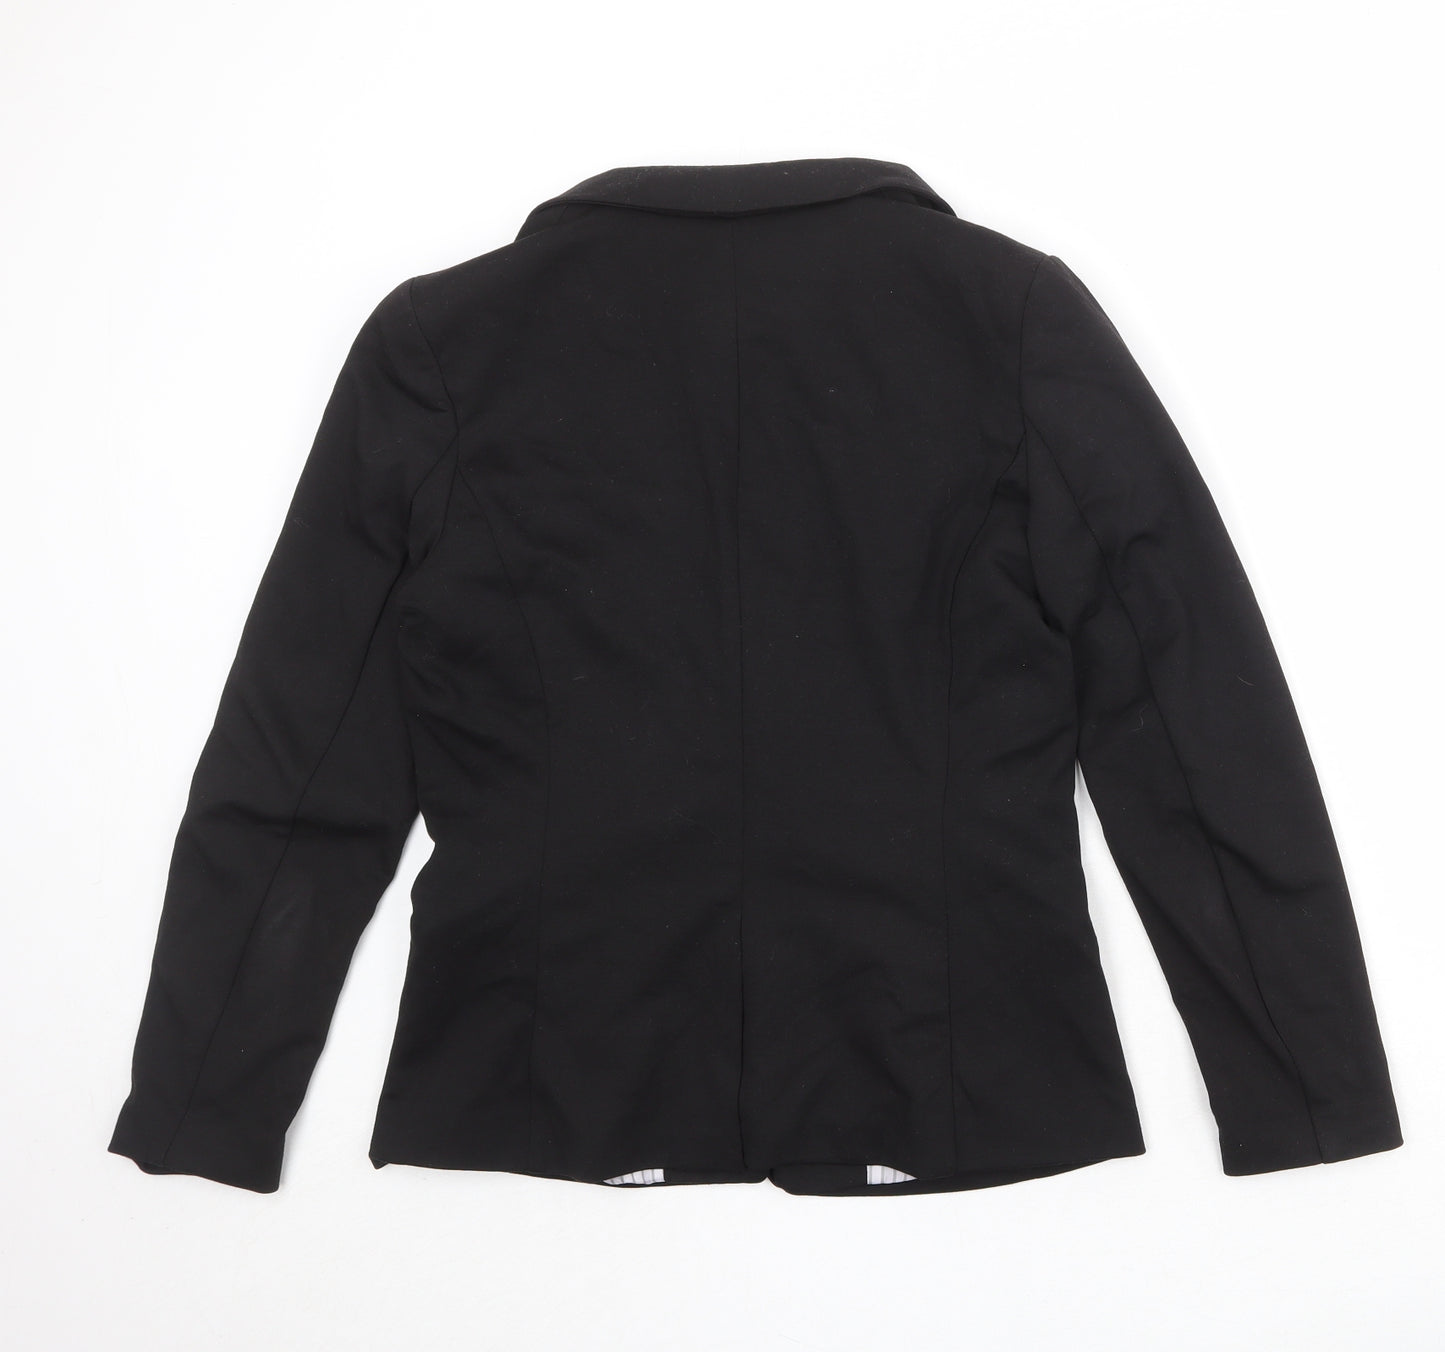 H&M Womens Black Polyester Jacket Blazer Size 16